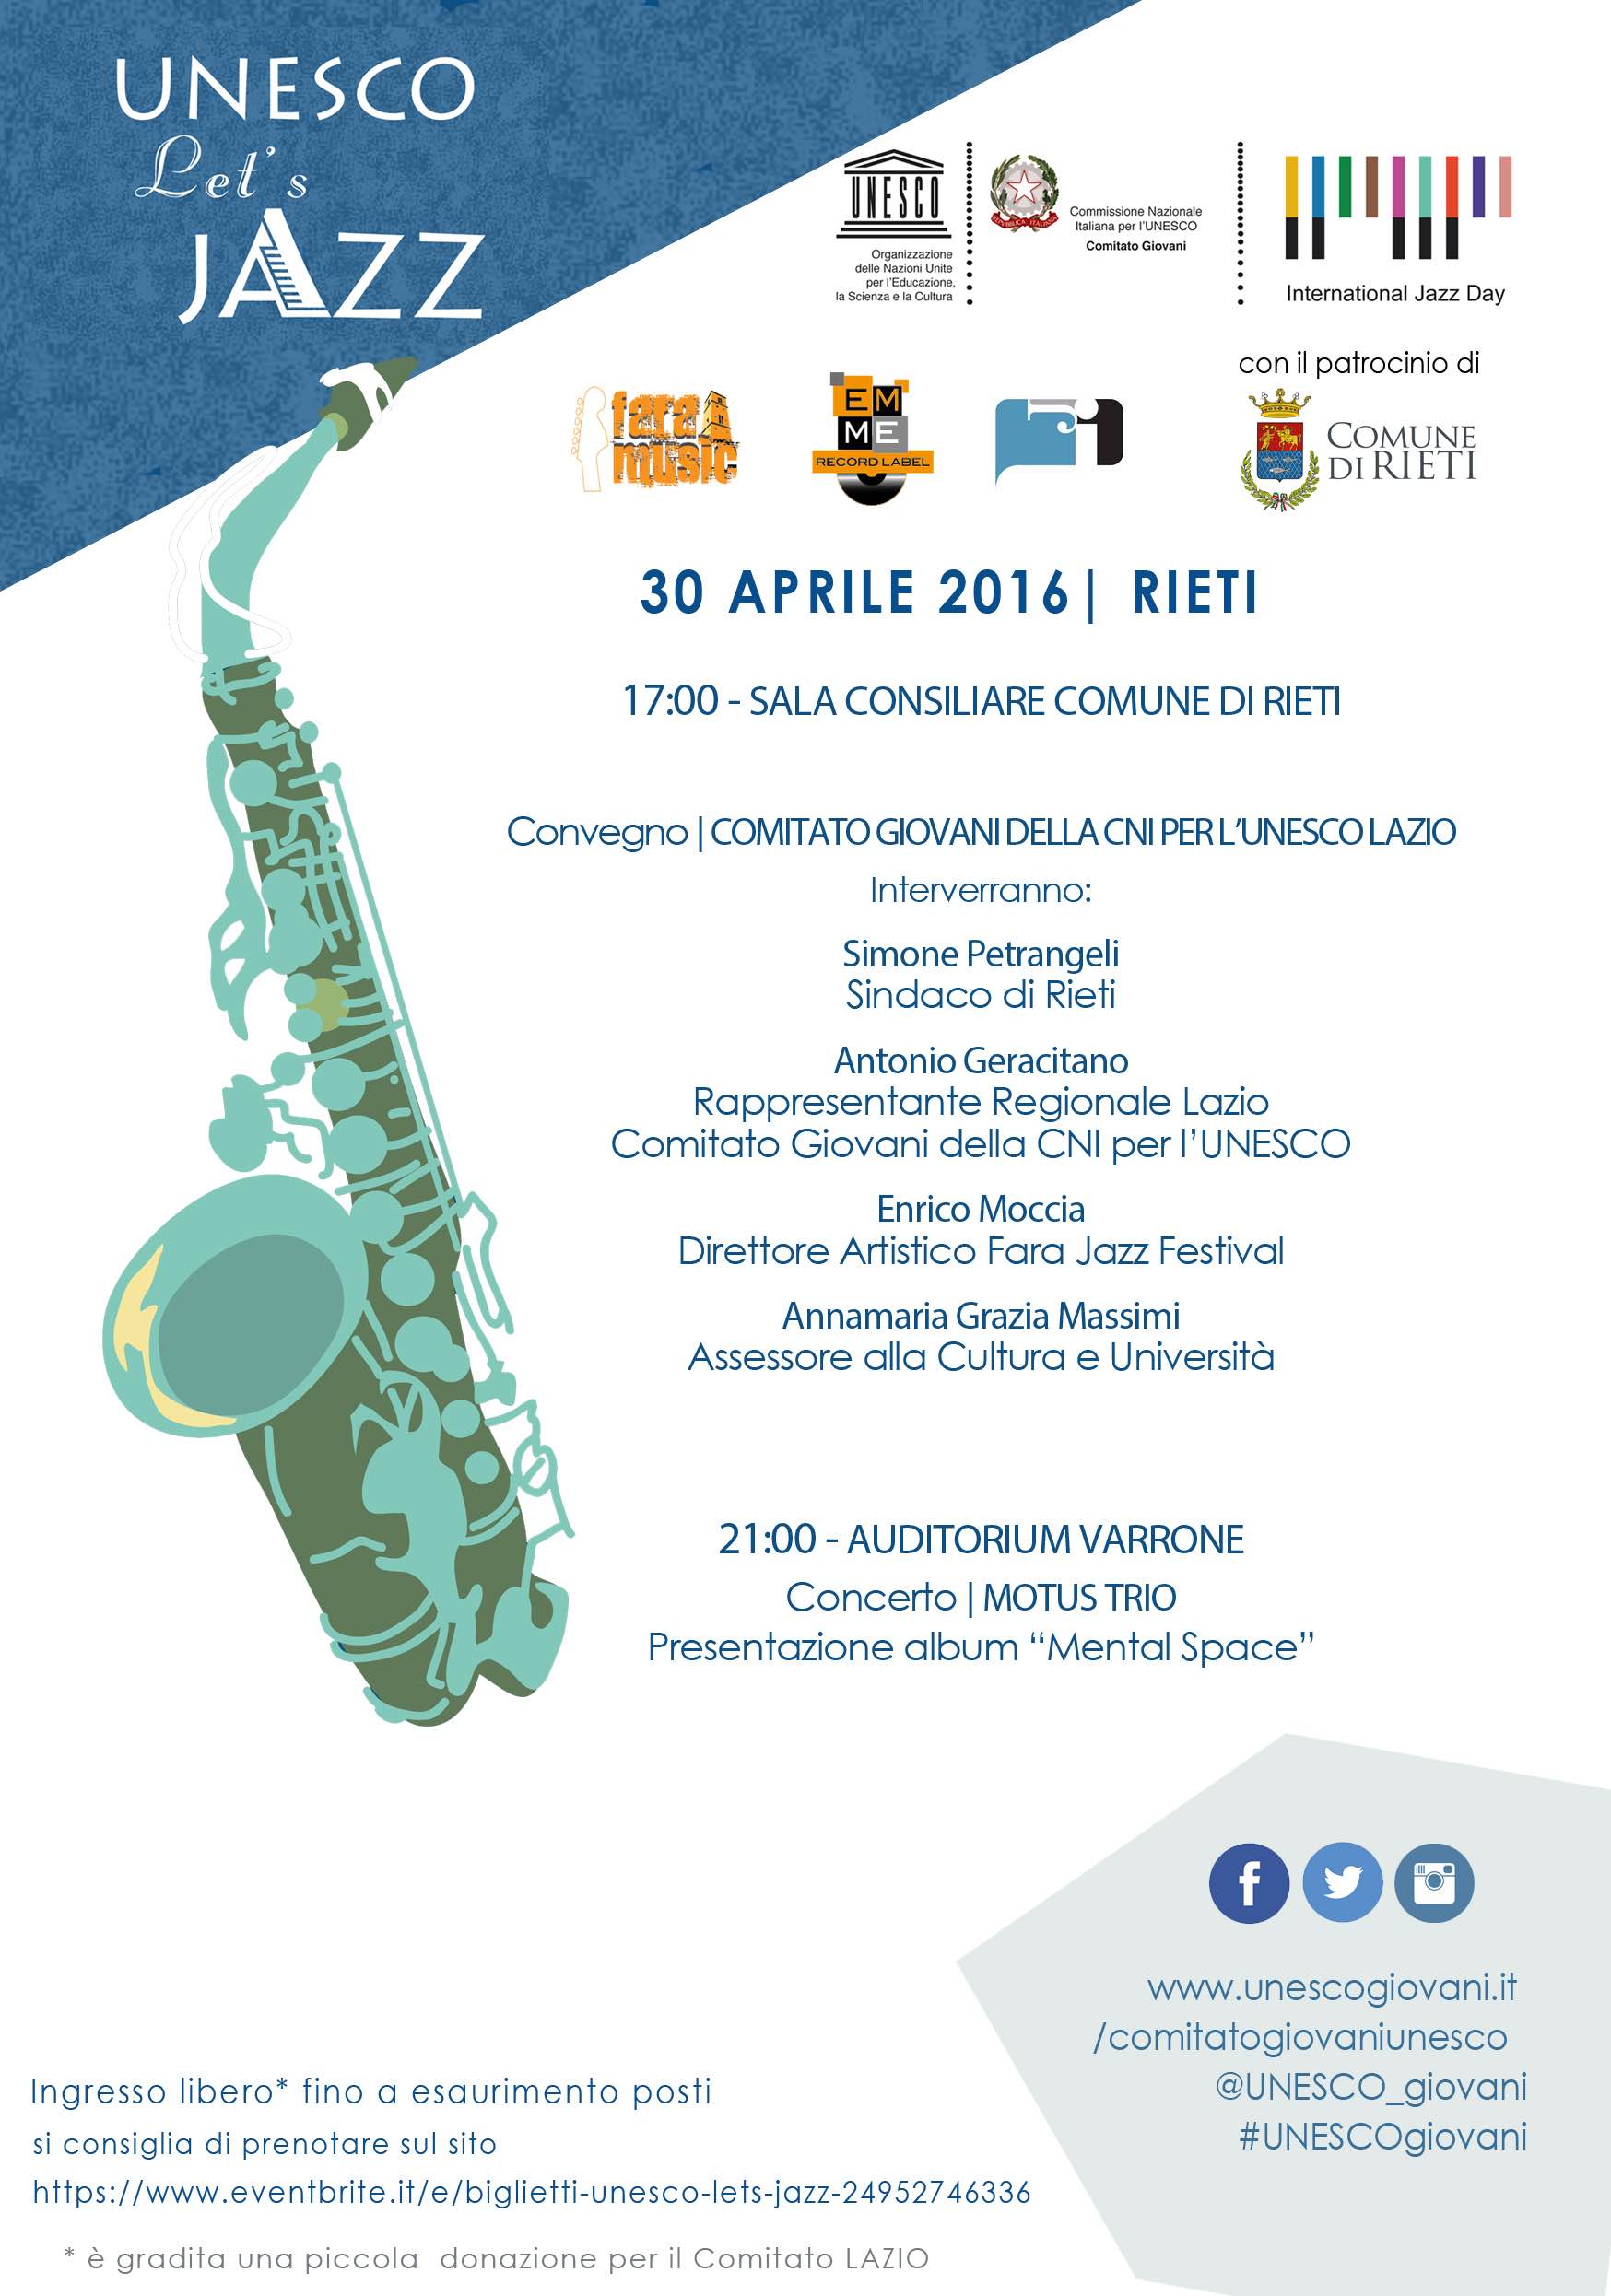 International Jazz Day, Fara Music e Unesco di nuovo insieme